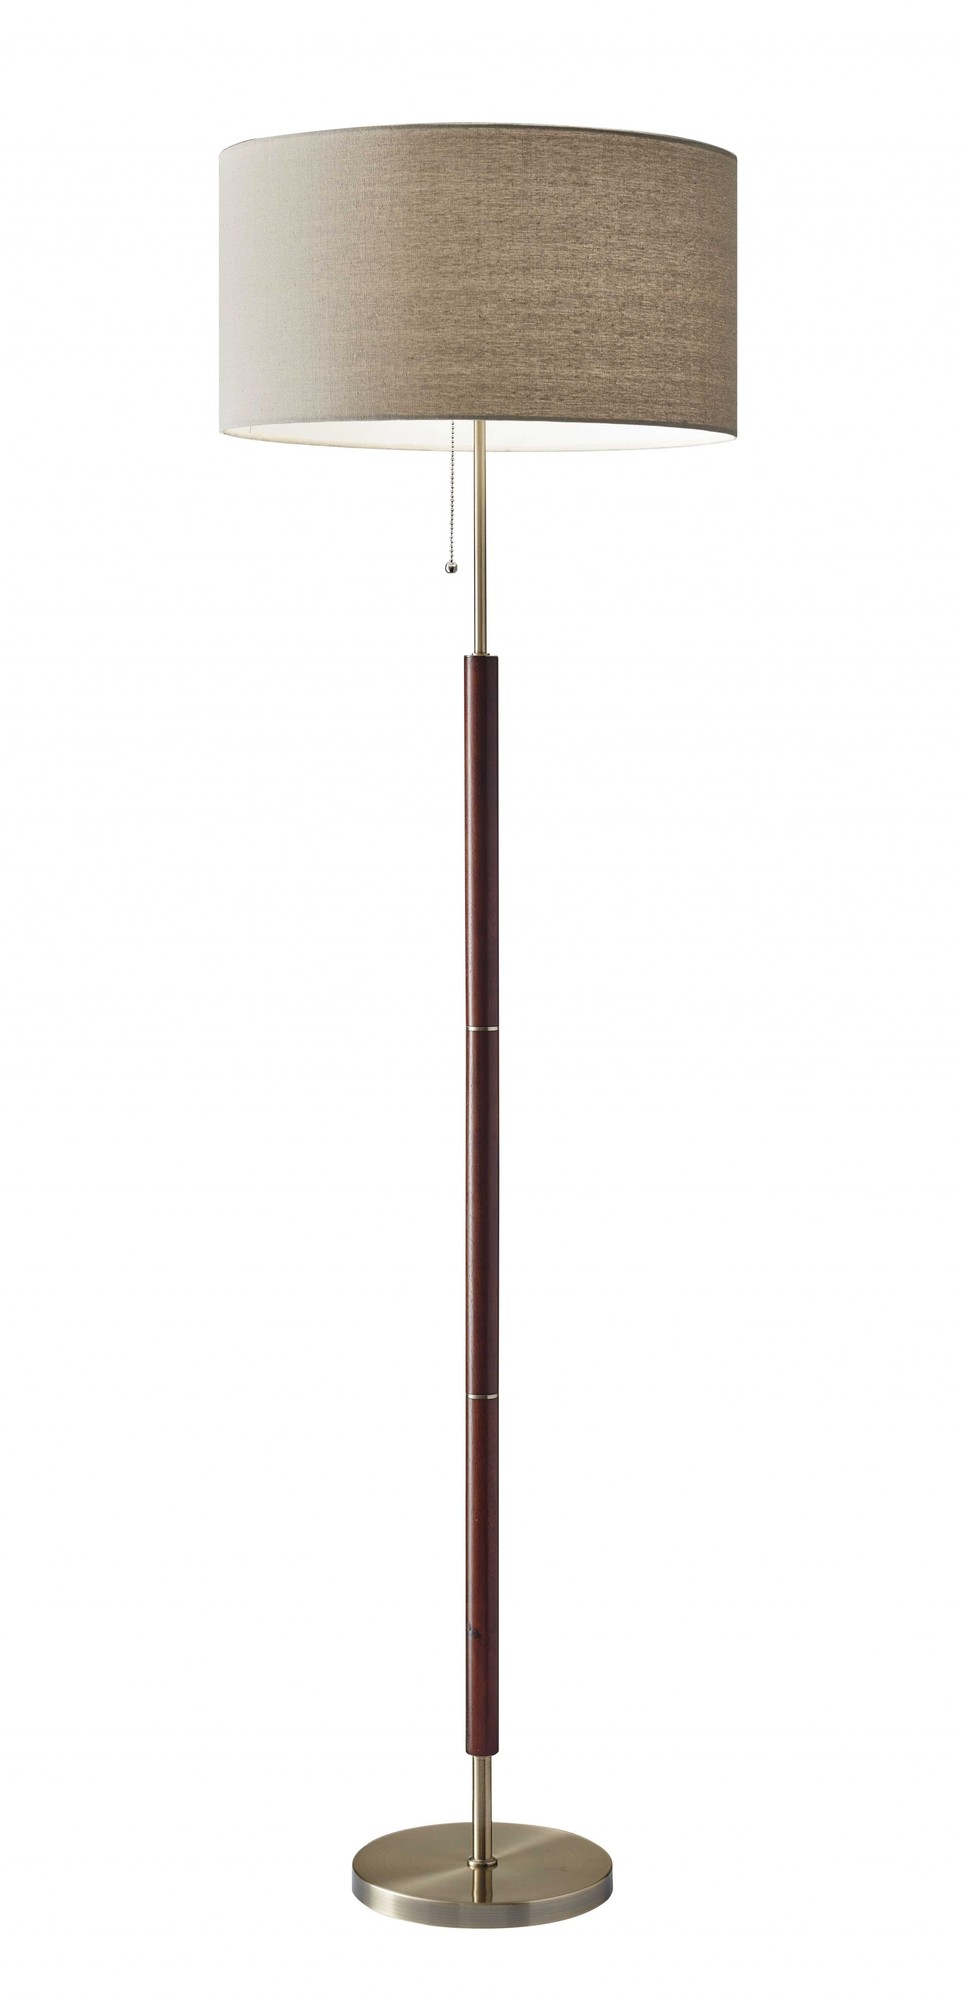 19" X 10" X 65.5" Walnut Wood Metal Floor Lamp